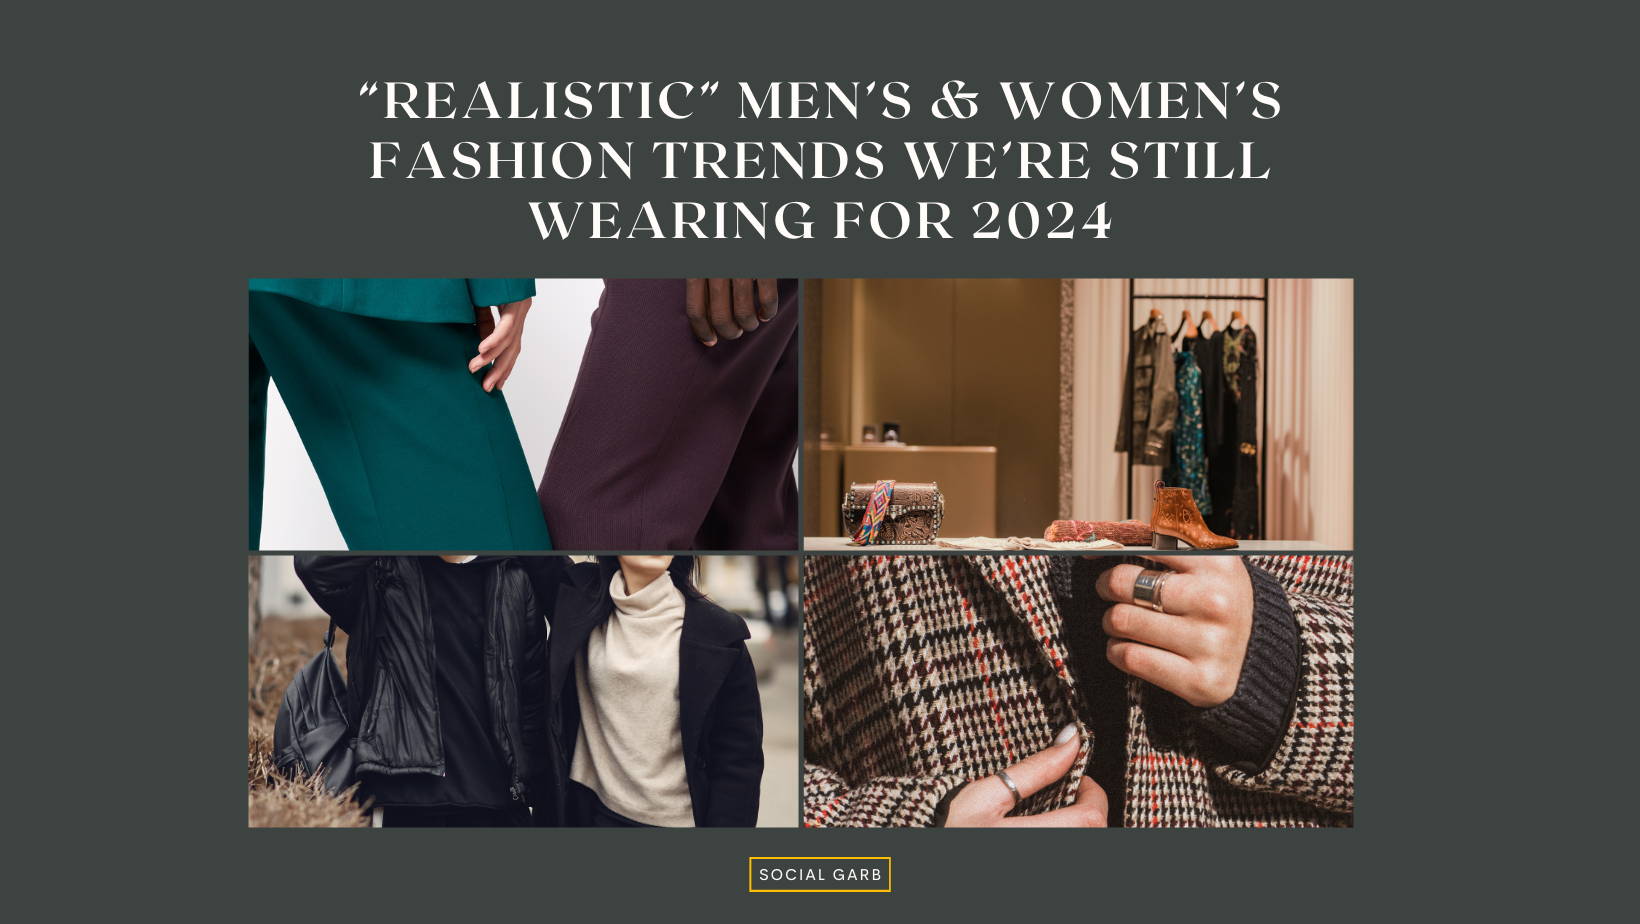 “Realistic” Men’s & Women’s Fashion Trends We’re Still Wearing for 2024